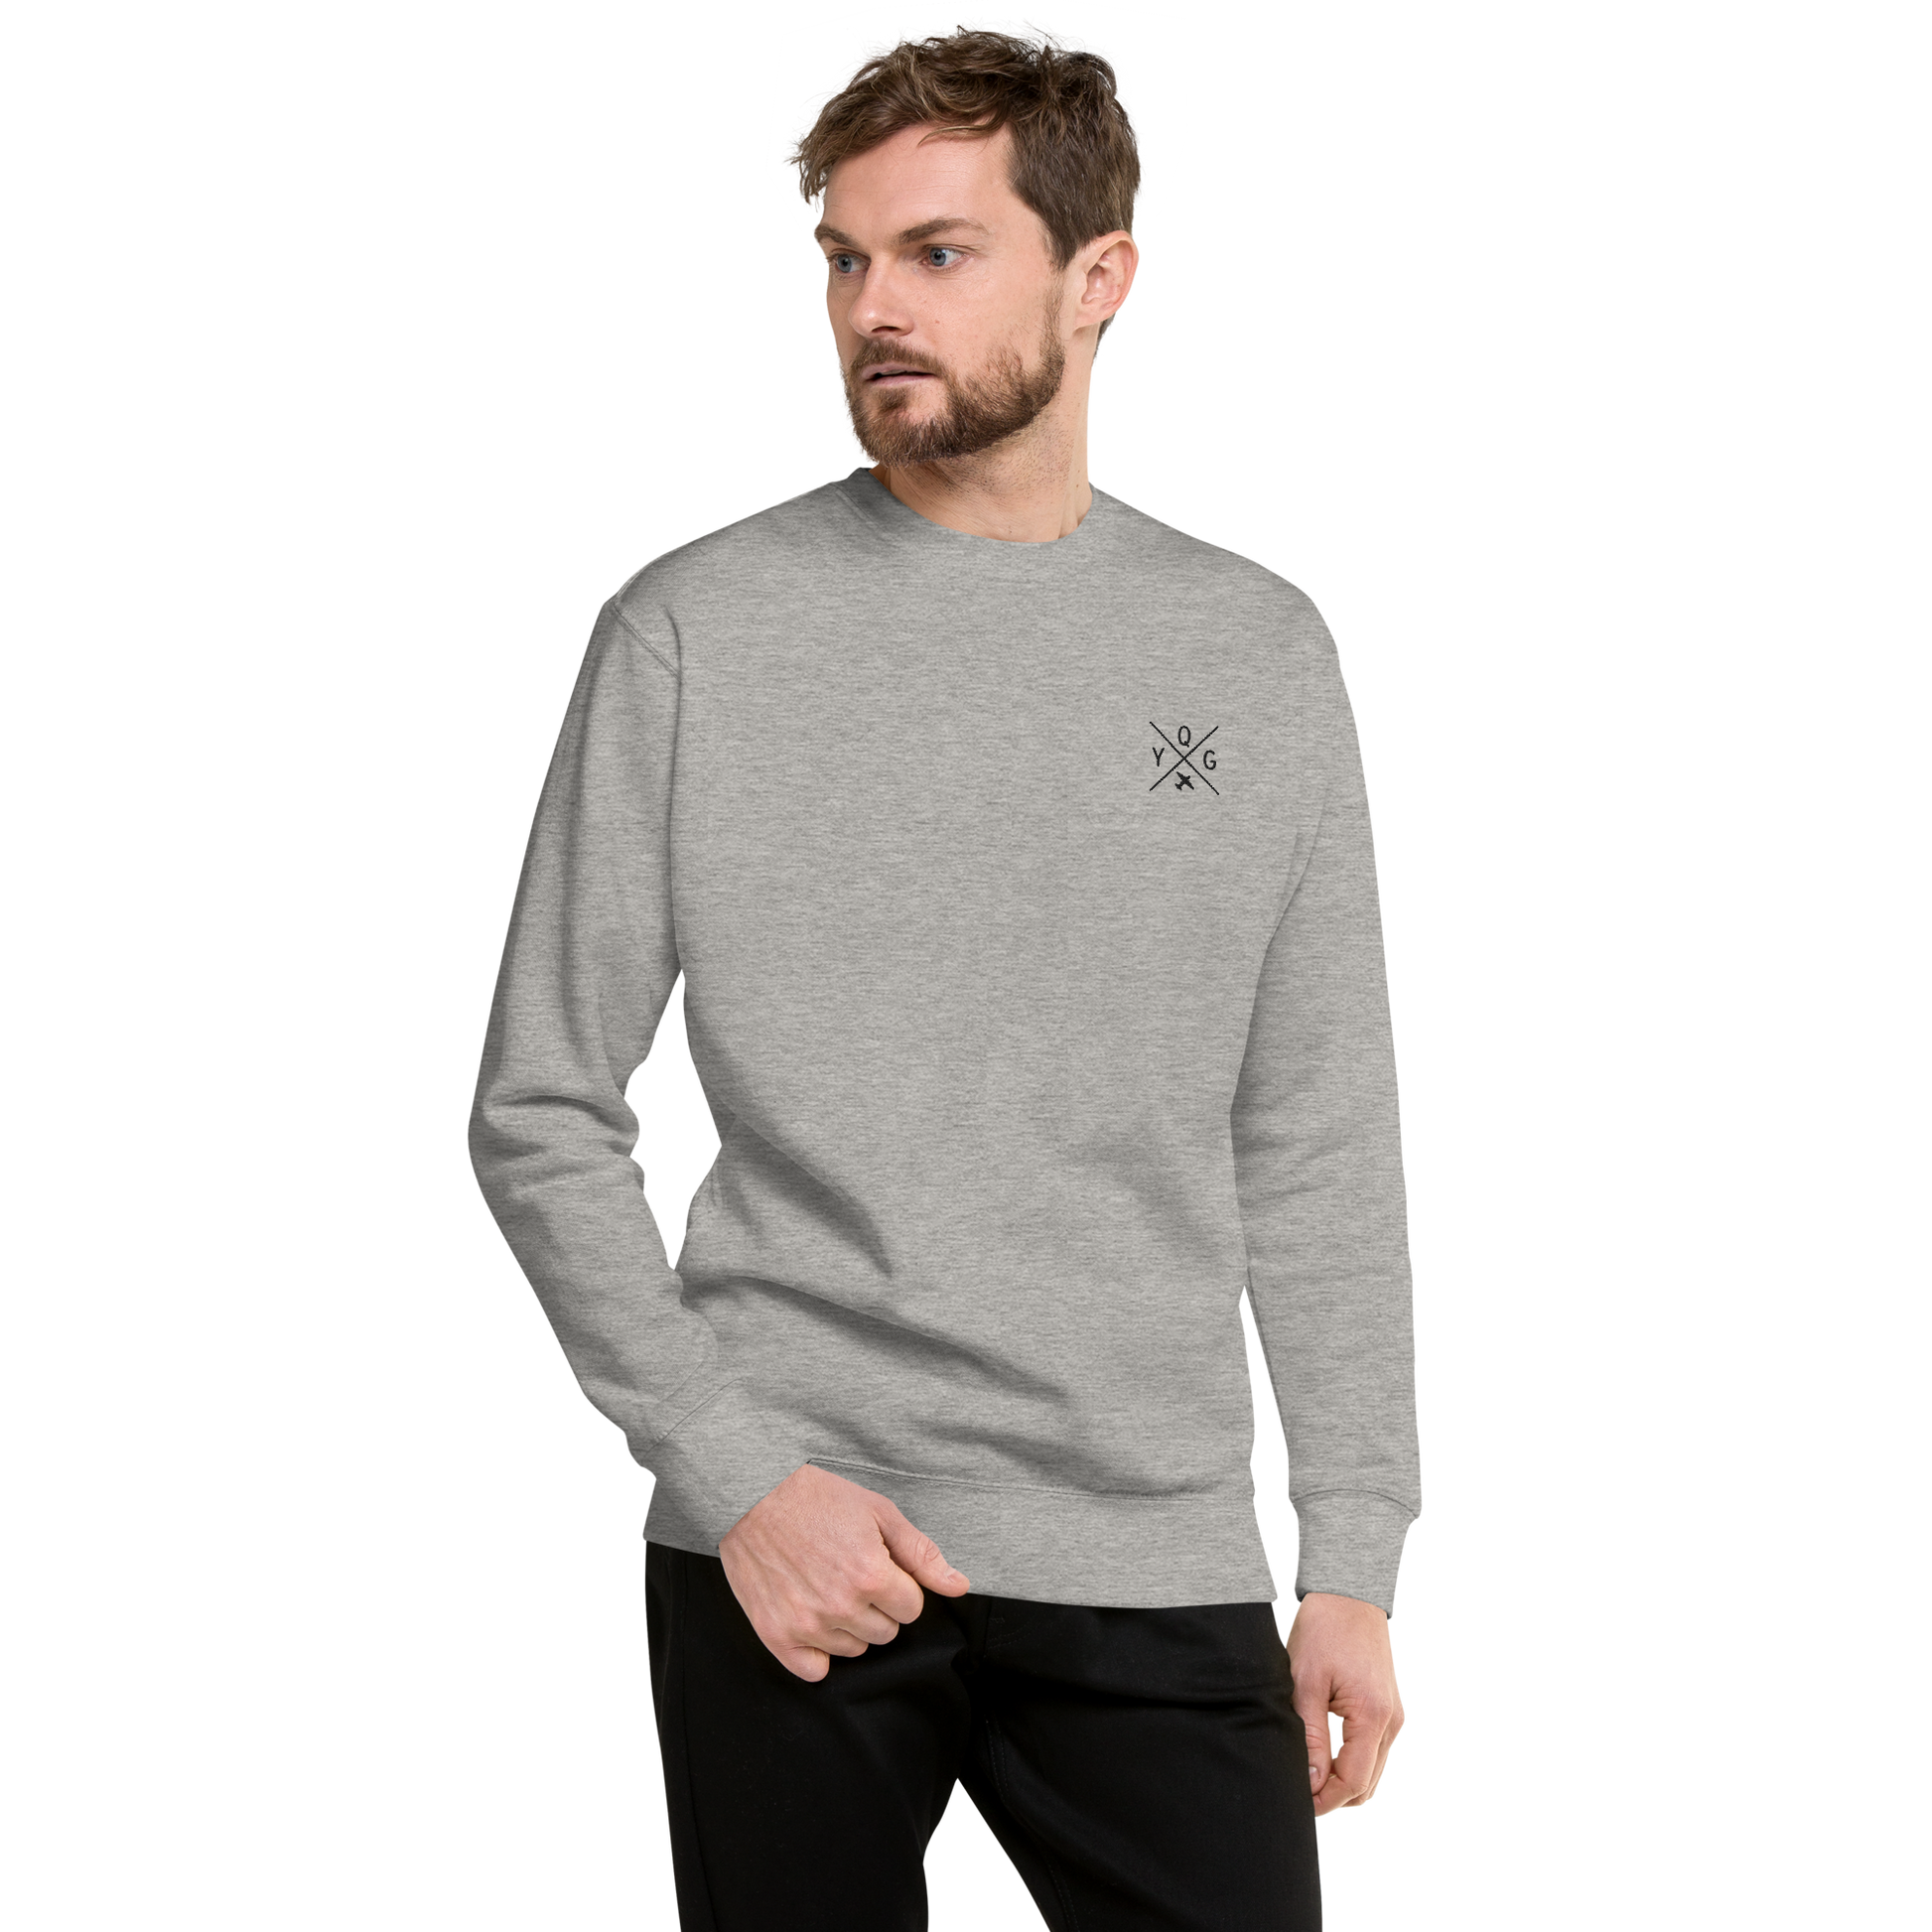 YHM Designs - YQG Windsor Premium Sweatshirt - Crossed-X Design with Airport Code and Vintage Propliner - Black Embroidery - Image 01